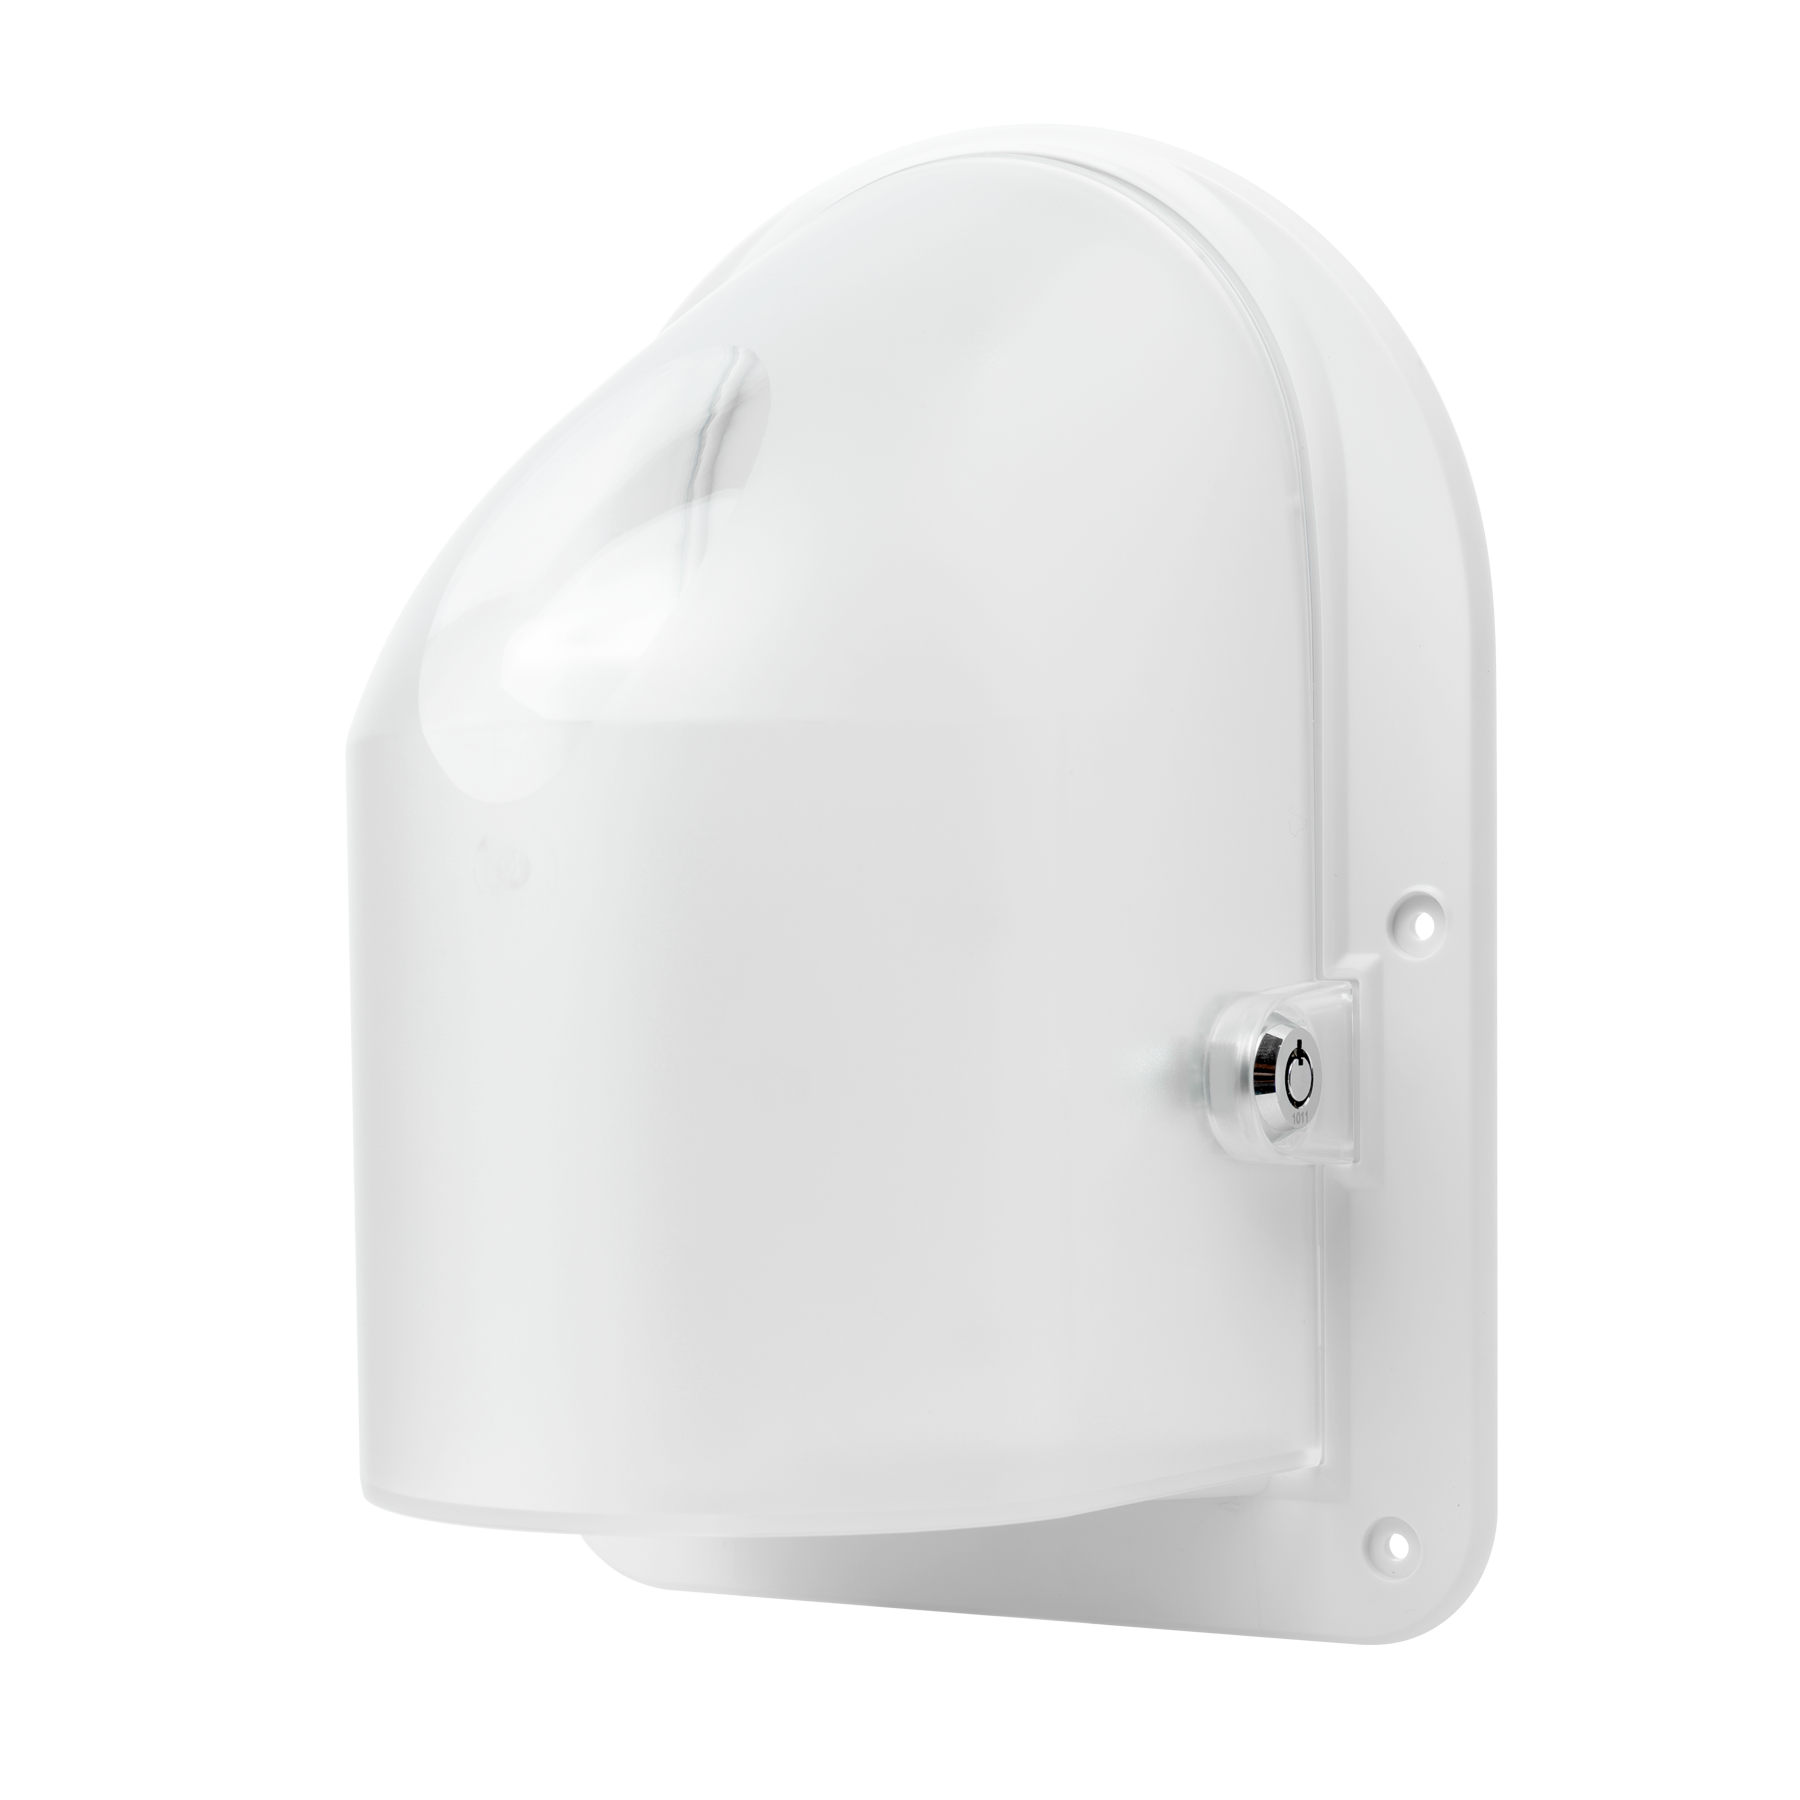 https://besafeprod.com/wp-content/uploads/2021/01/BSP-TR230-Toilet-Paper-Dispenser-Angle-2.png